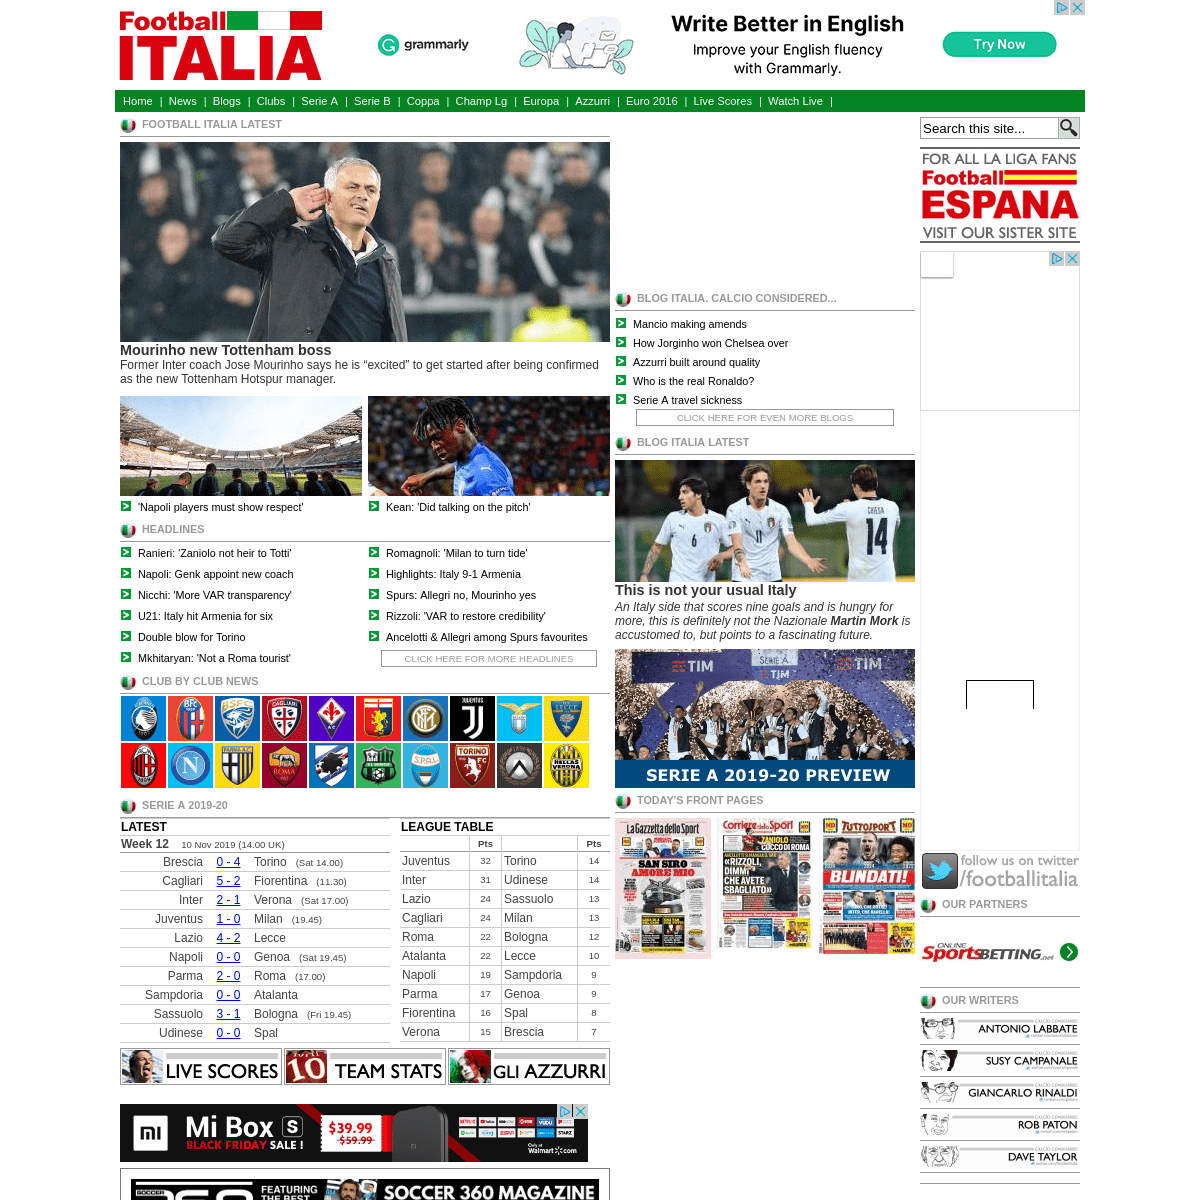 A complete backup of football-italia.net